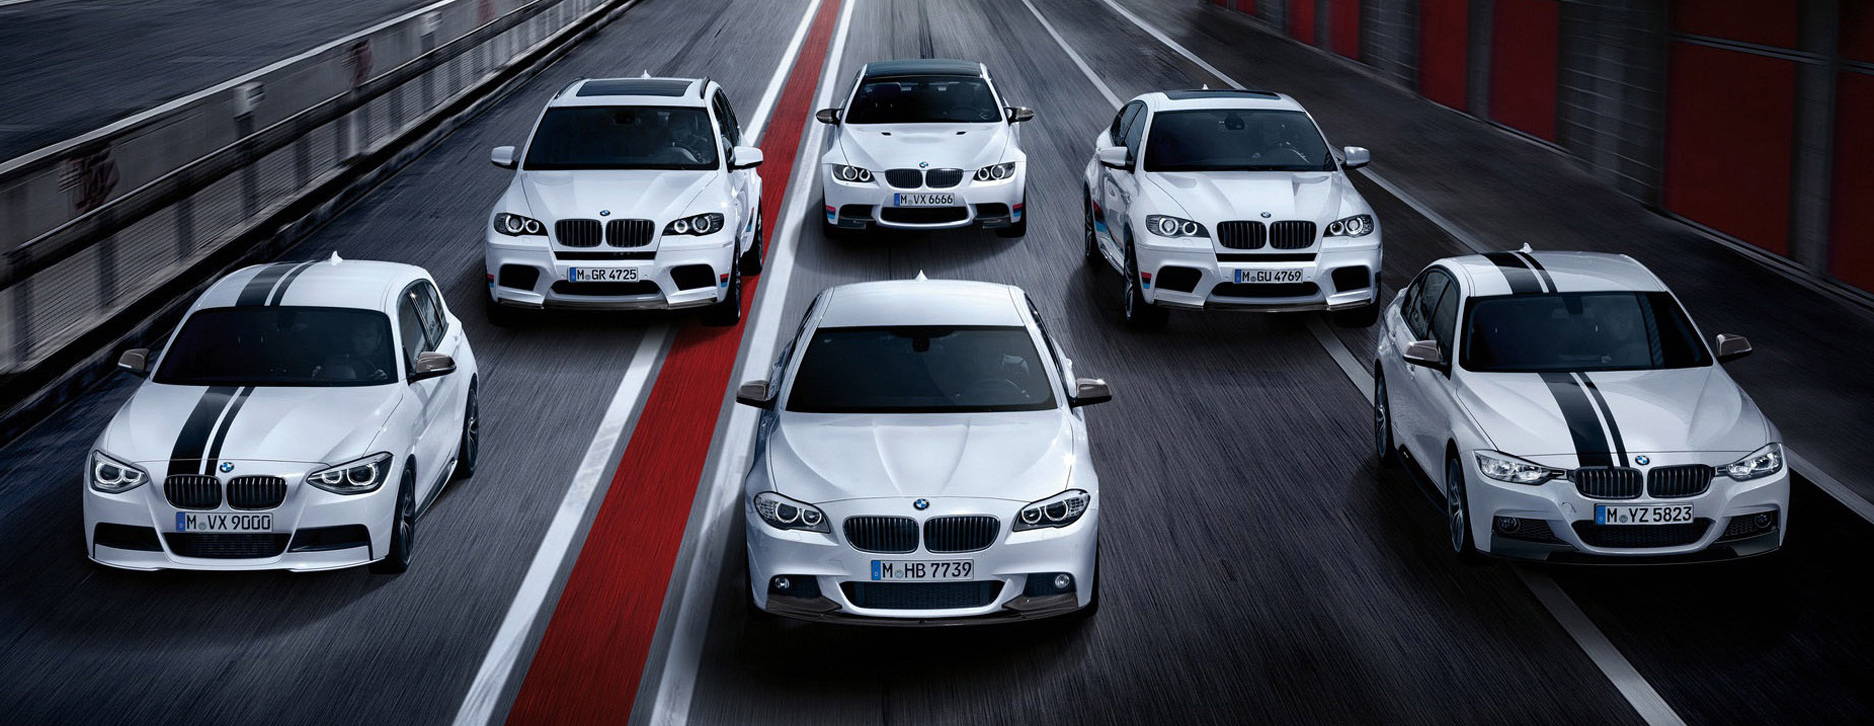 BMW Performance Cars